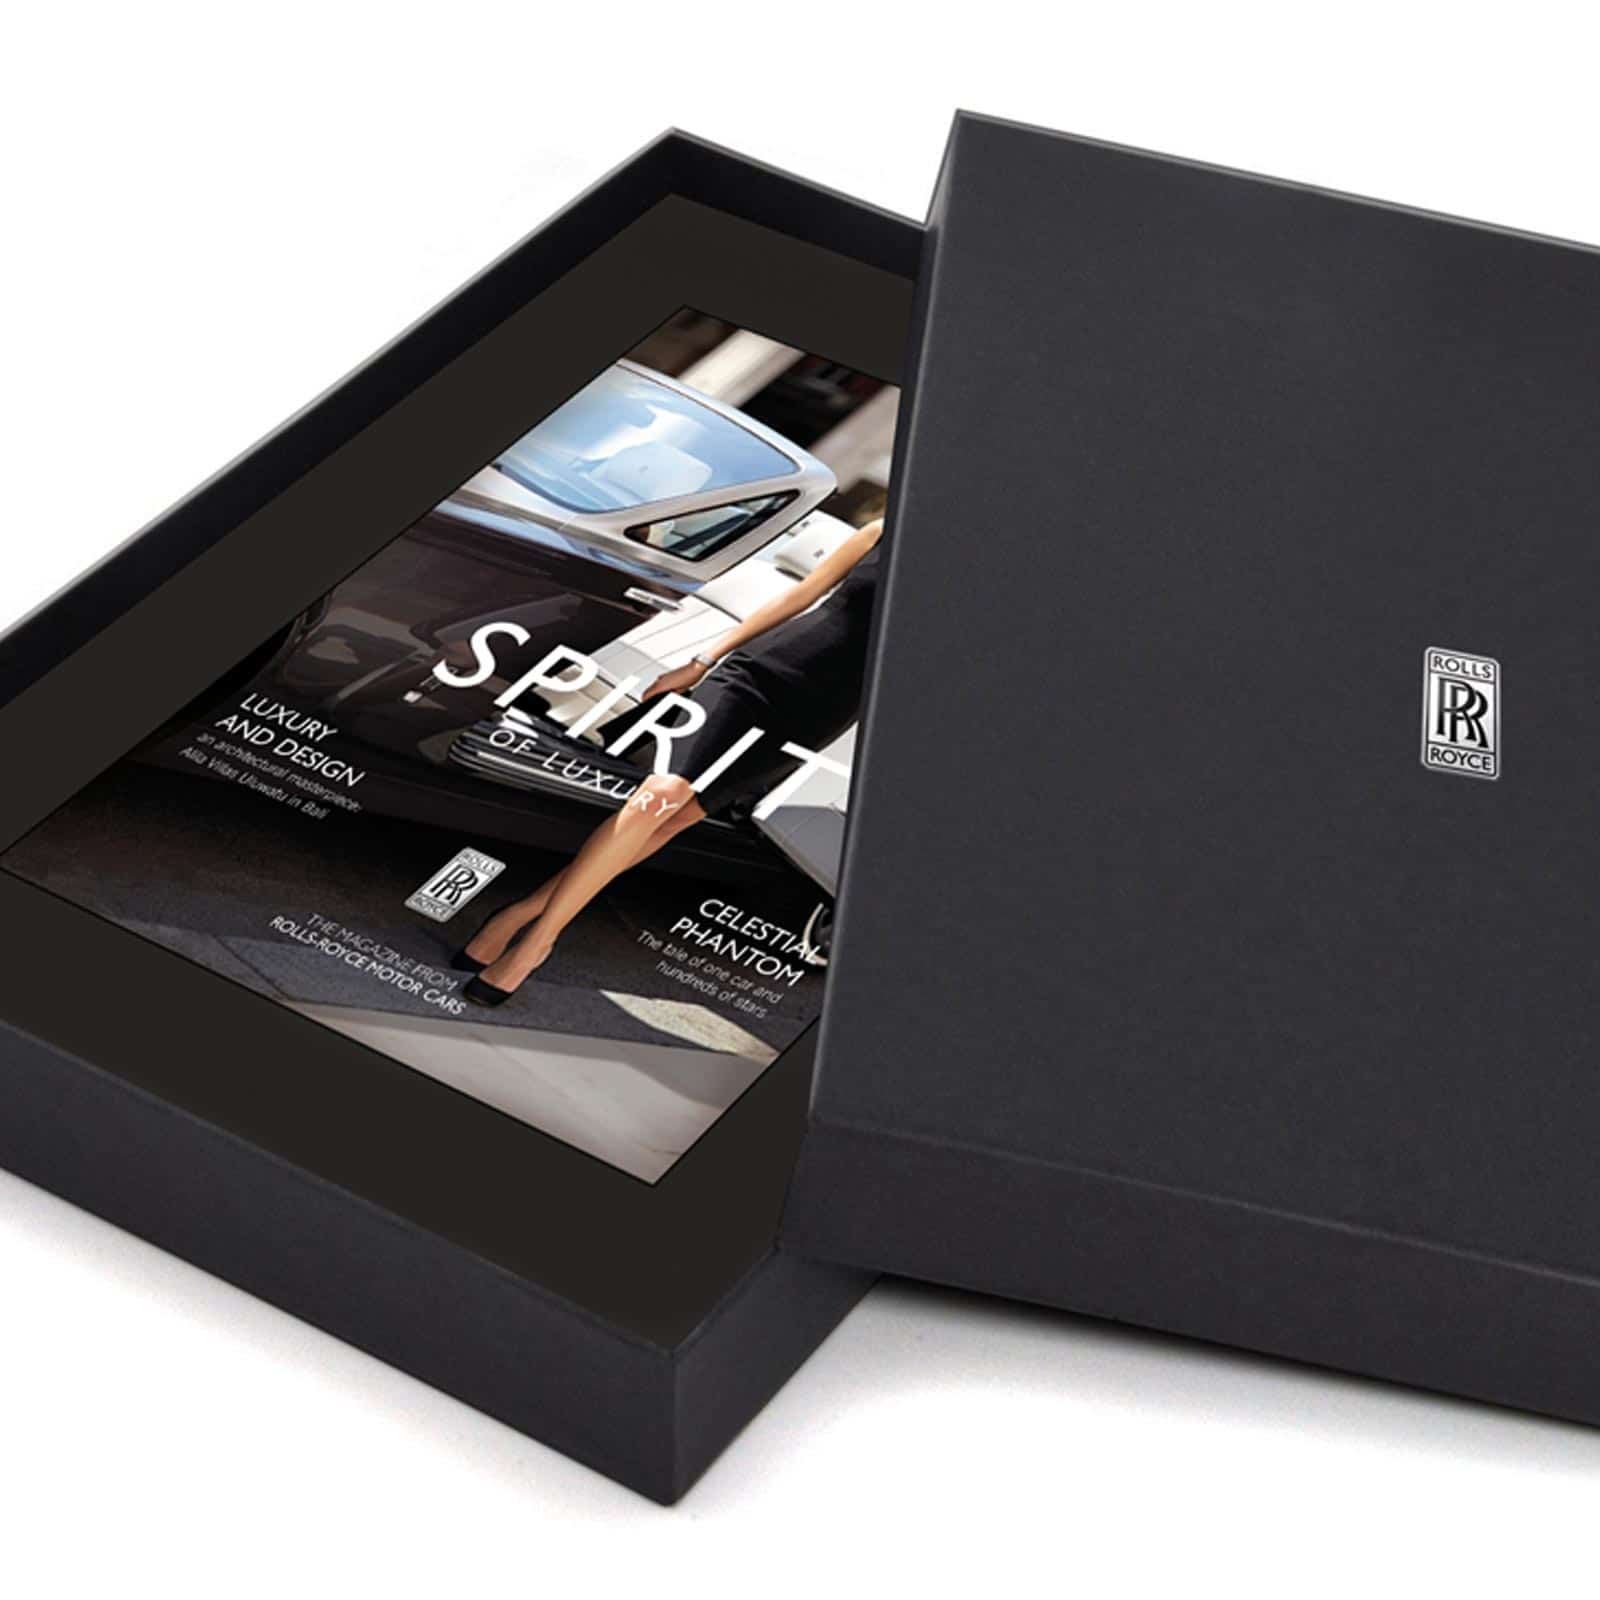 Rolls-Royce hard Back Coffee Tabel Book and Presentation Box